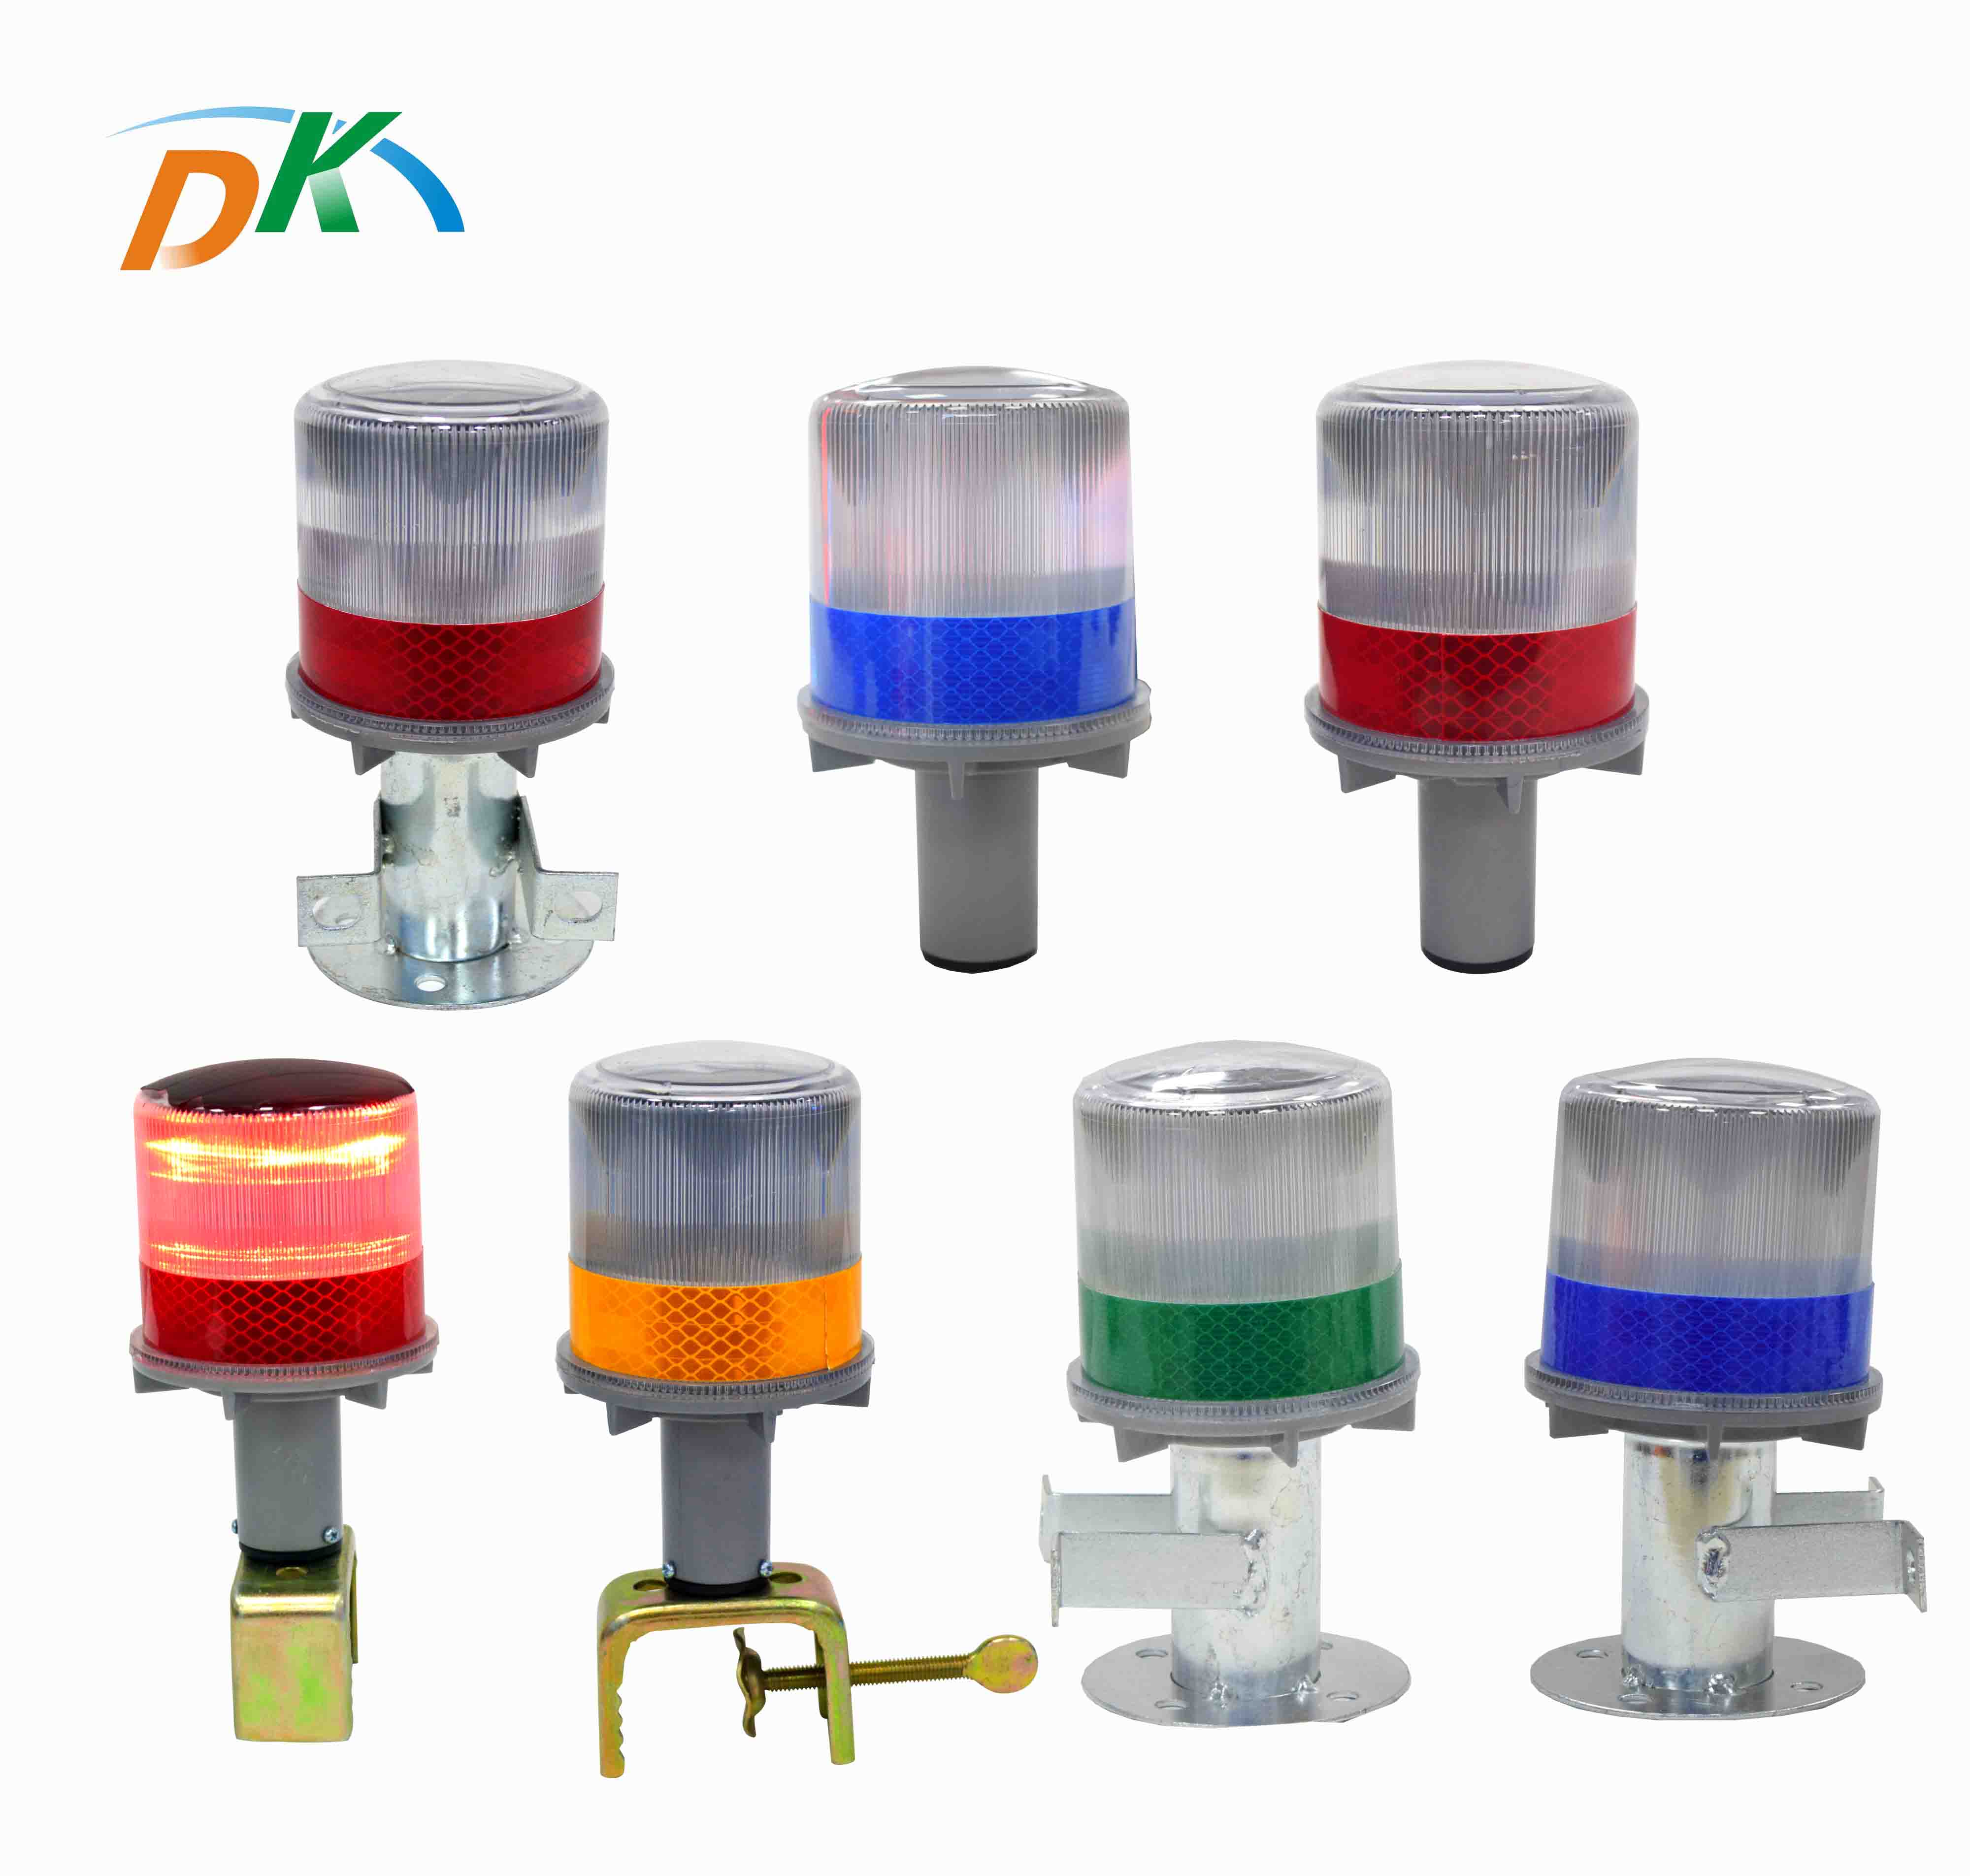 DK solar powered traffic signal light flashing cone light manufacture